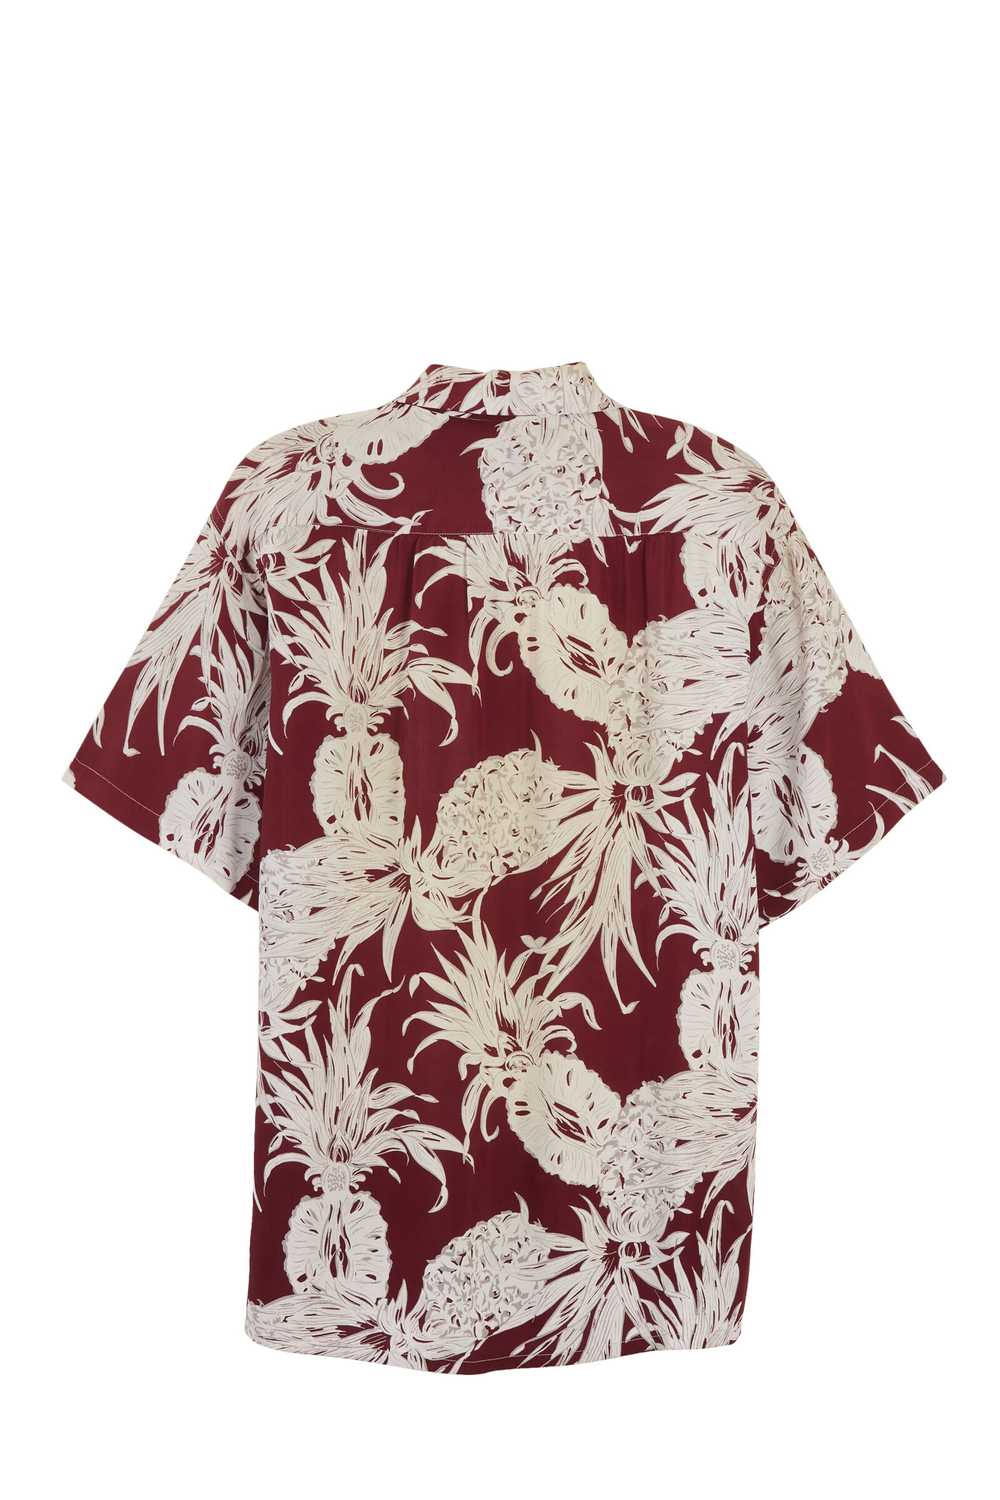 Burgundy Floral Ashfield Hawaiian Shirt - image 2